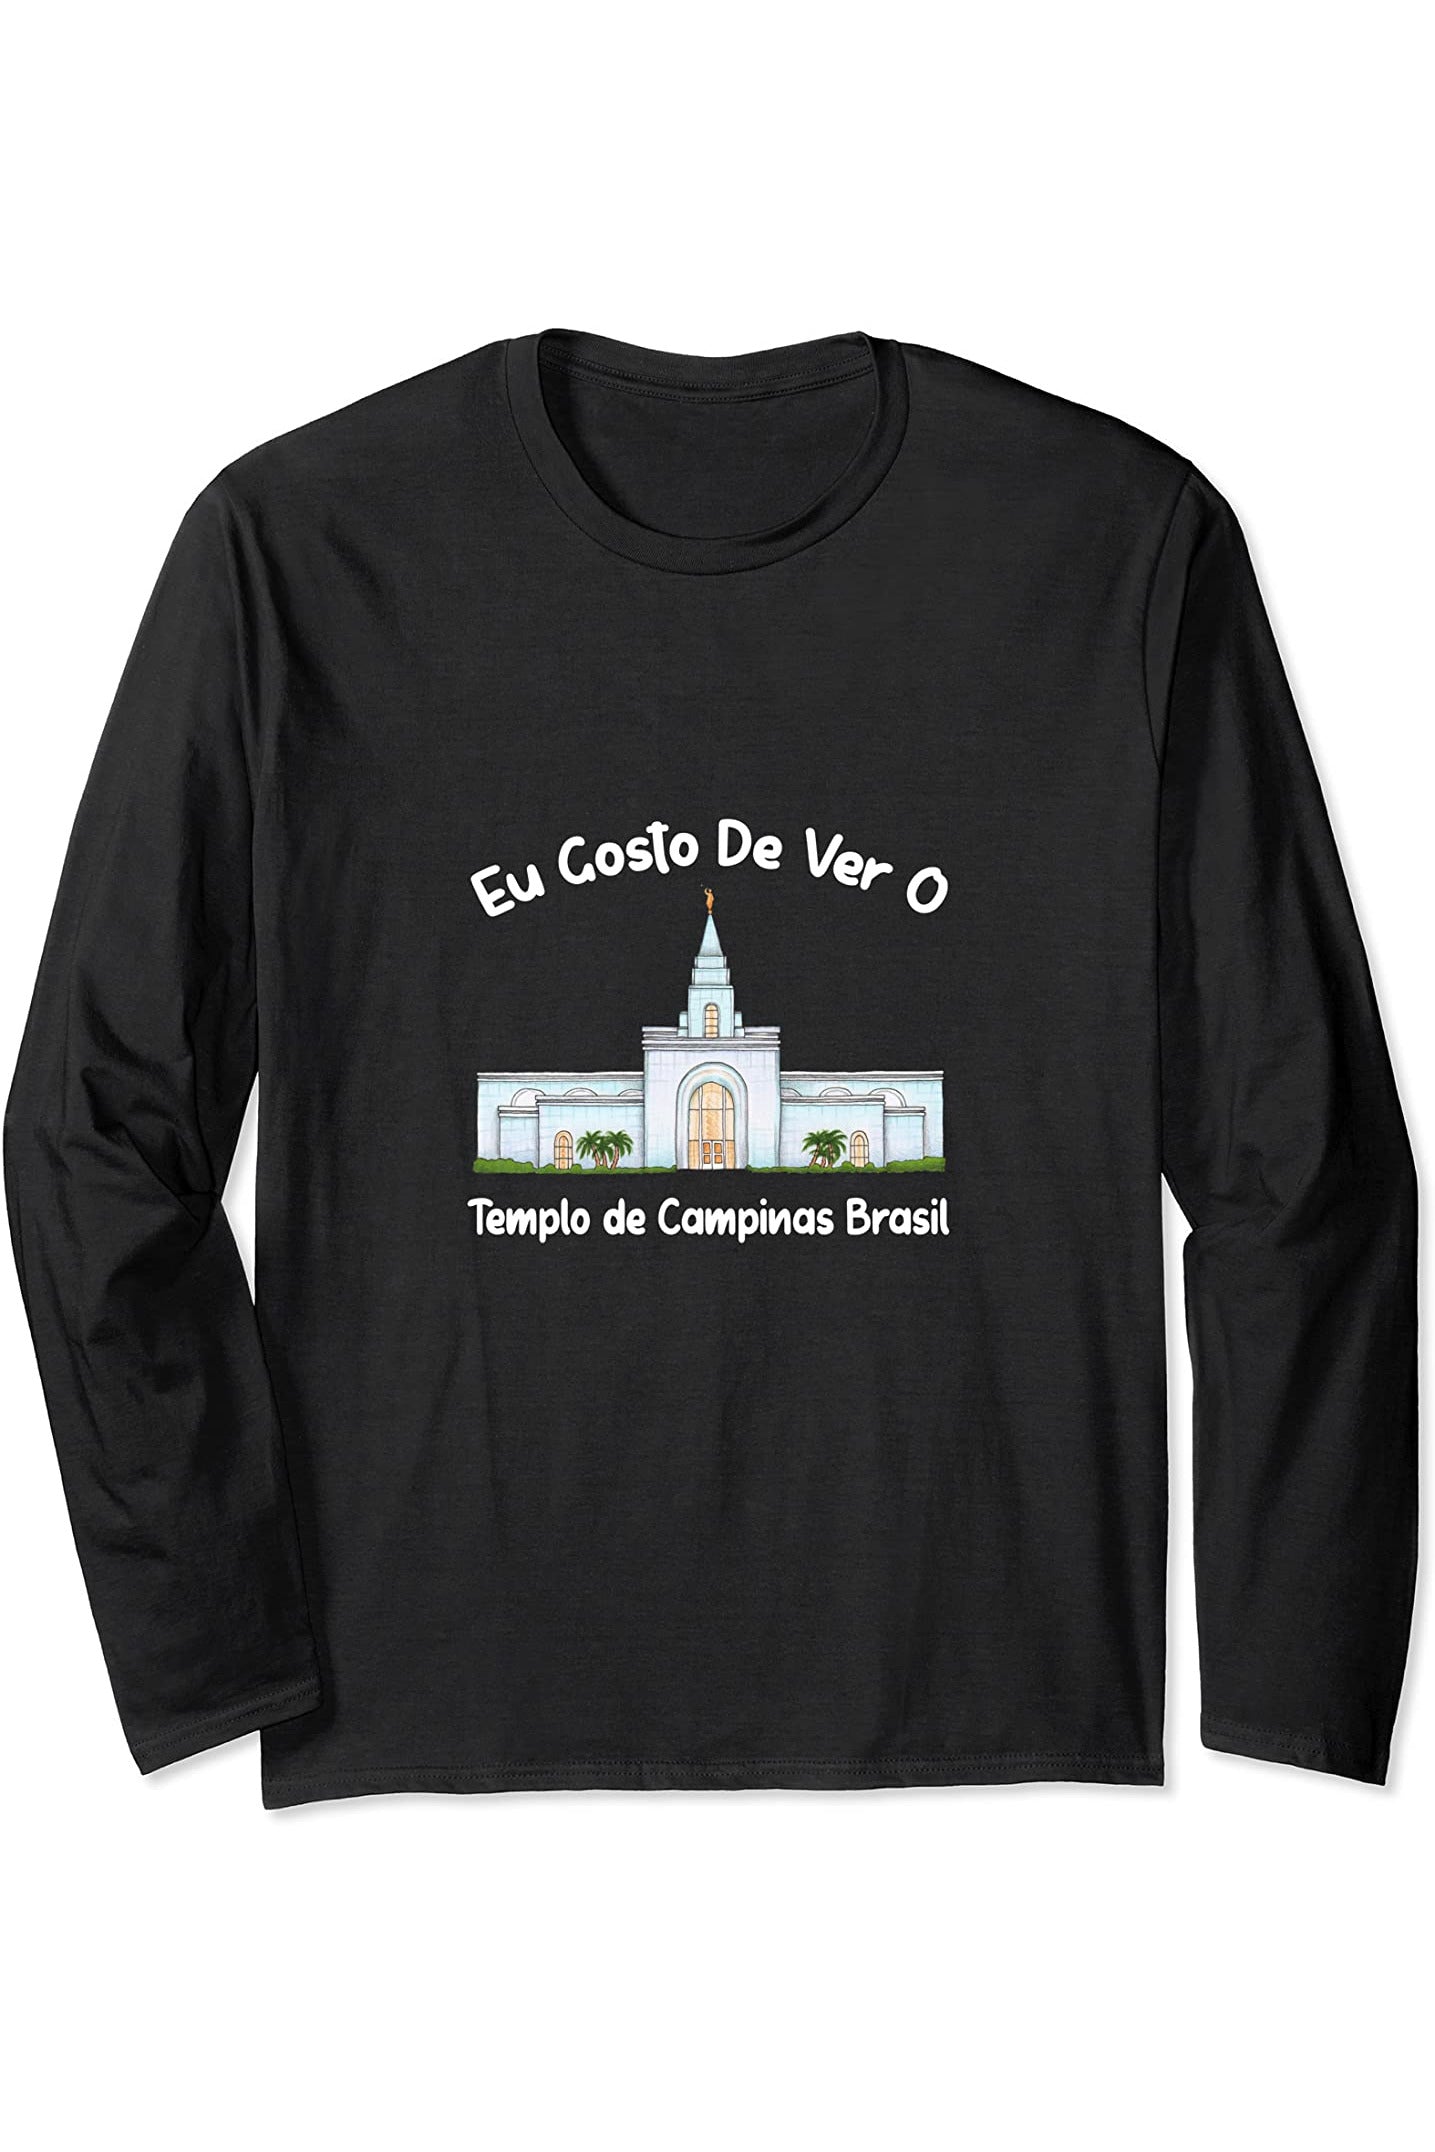 Templo de Manaus Brasil Long Sleeve T-Shirt - Primary Style (Portuguese) US